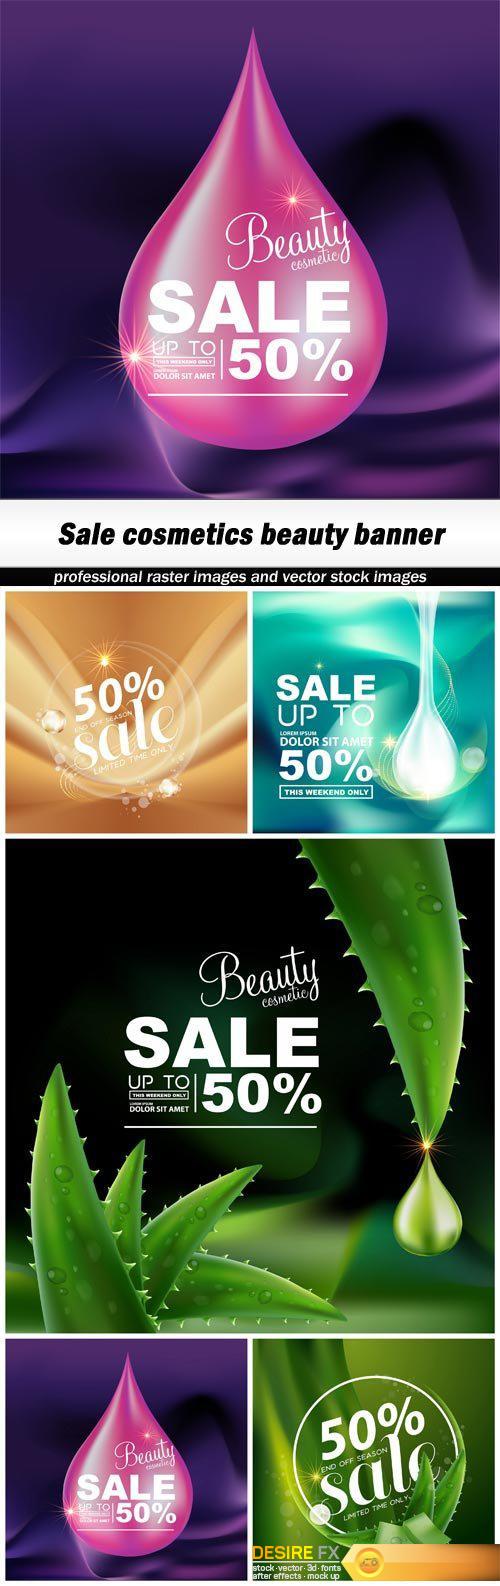 Sale cosmetics beauty banner - 5 EPS